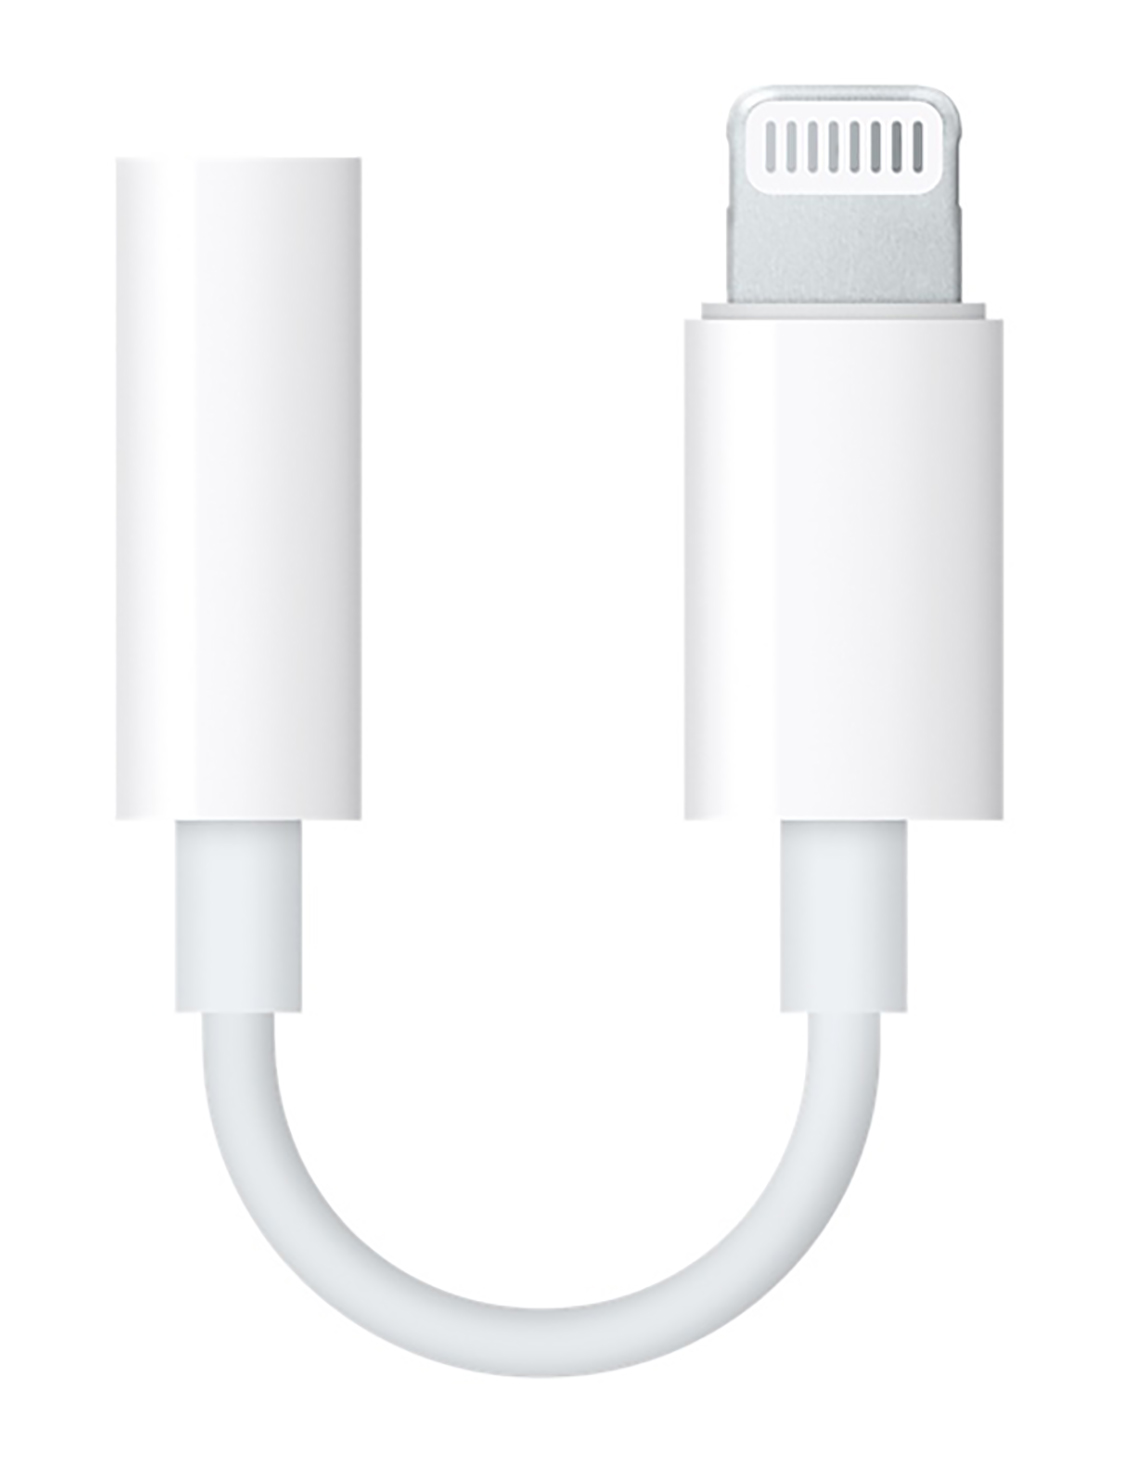 Apple Lightning to 3.5 mm Headphone Jack Adapter - image 2 of 4